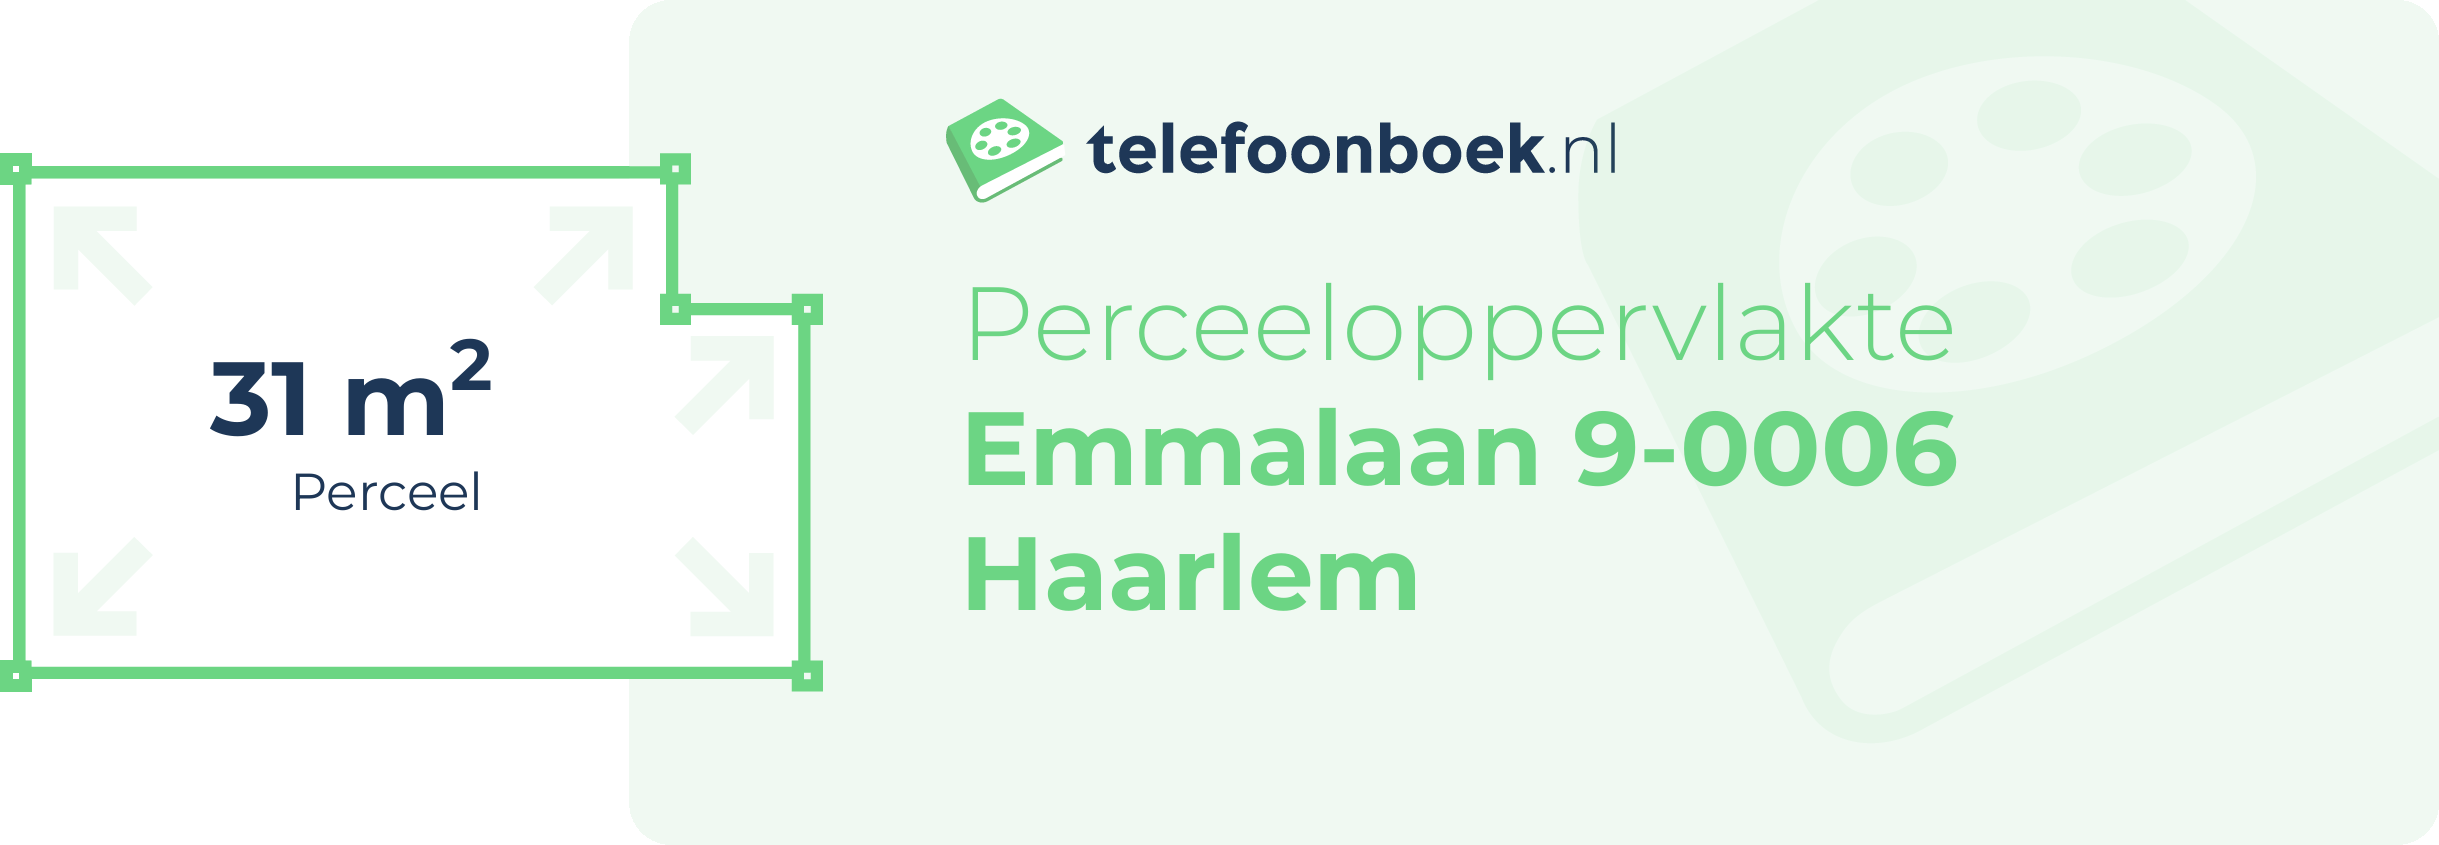 Perceeloppervlakte Emmalaan 9-0006 Haarlem